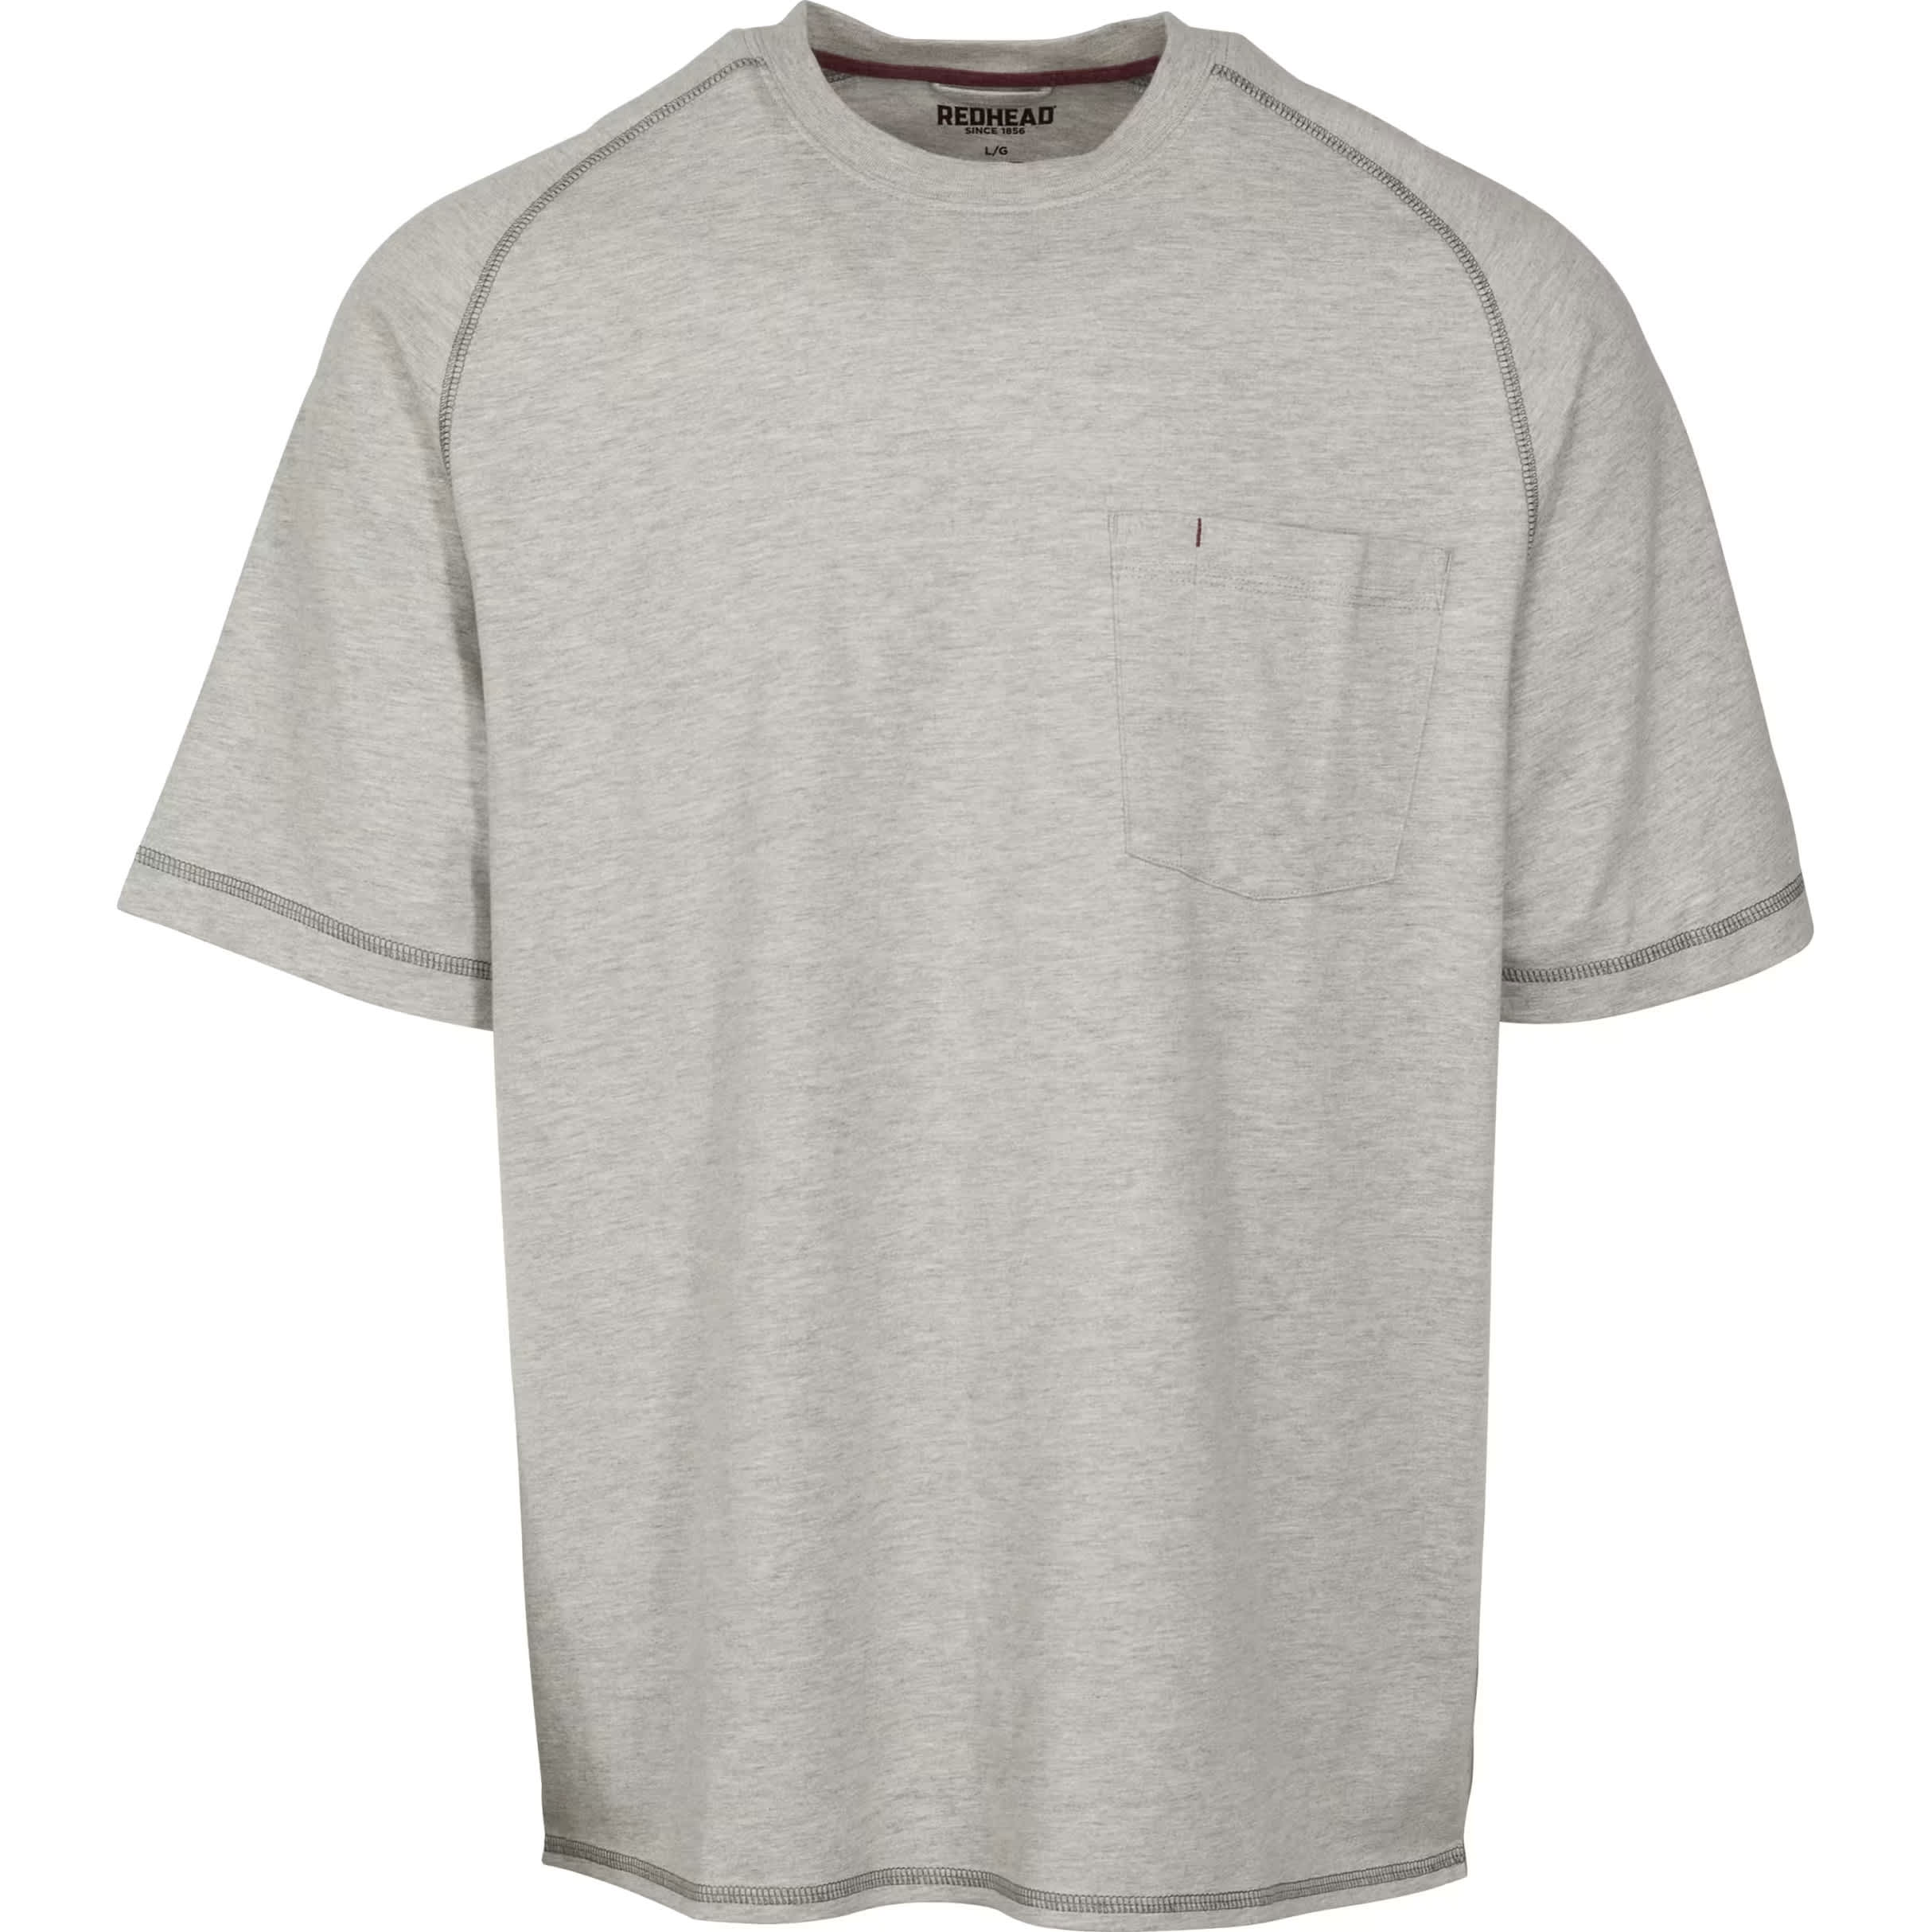 RedHead® Men’s Pro Series Pocket Tech Short-Sleeve Shirt